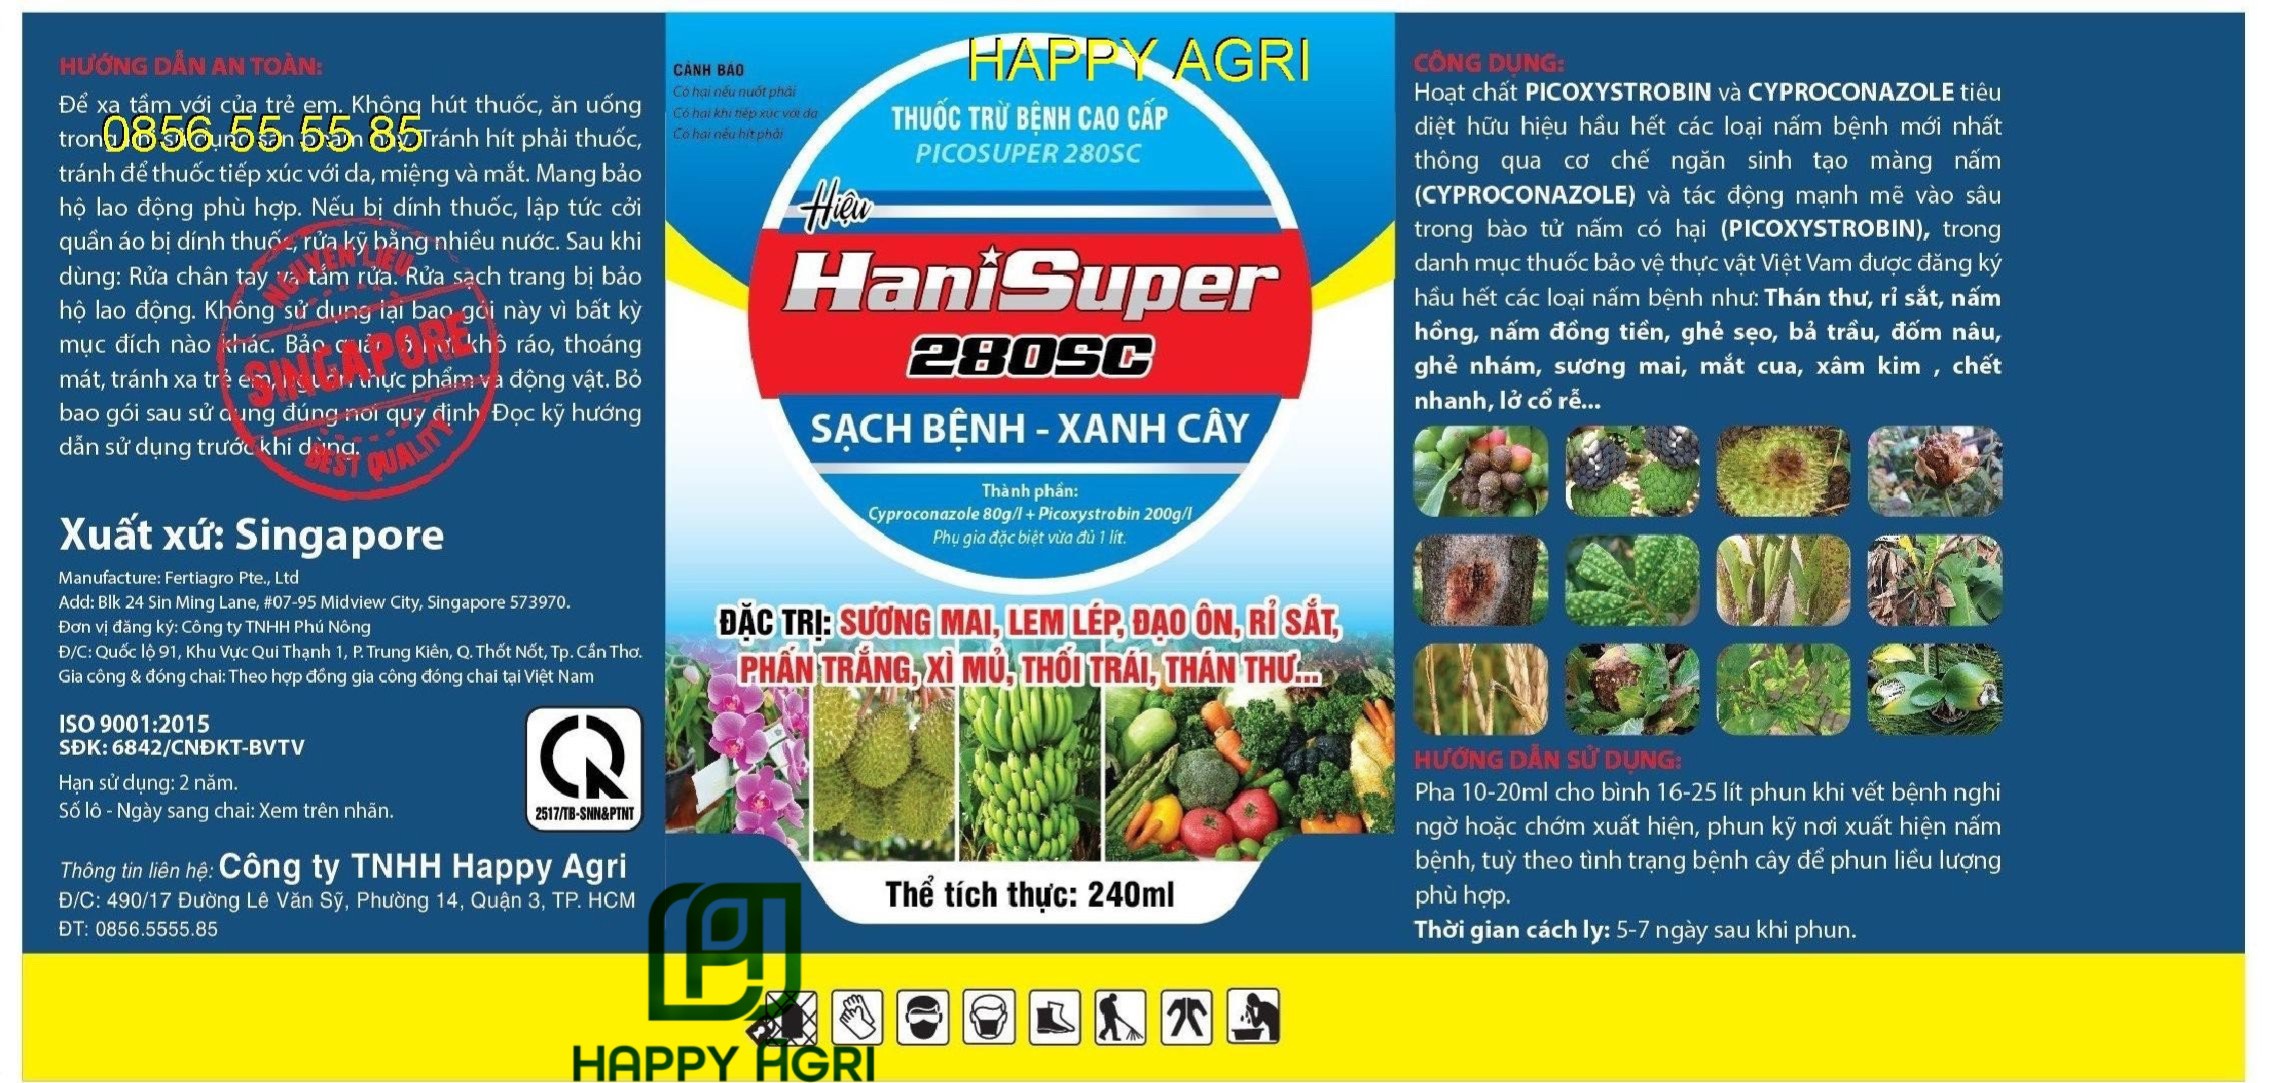 HaniSuper 280SC - Thuốc trừ bệnh cao cấp Picosuper 280sc